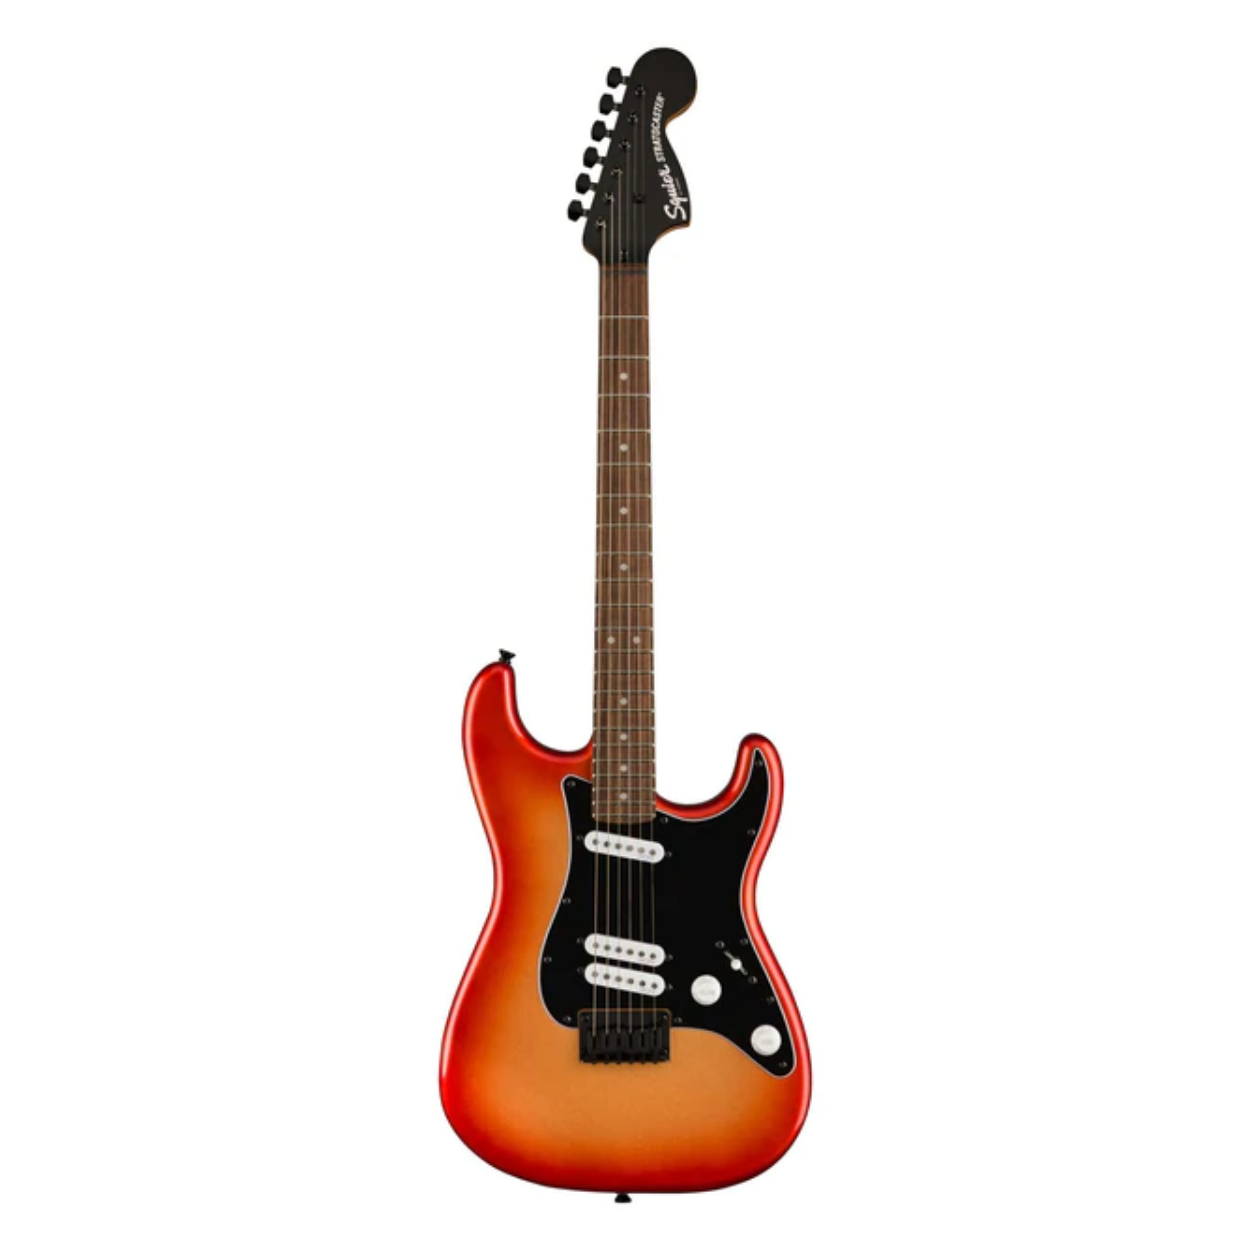 Squier Contemporary Stratocaster Special Hardtail Electric Guitar, Laurel FB, Sunset Metallic